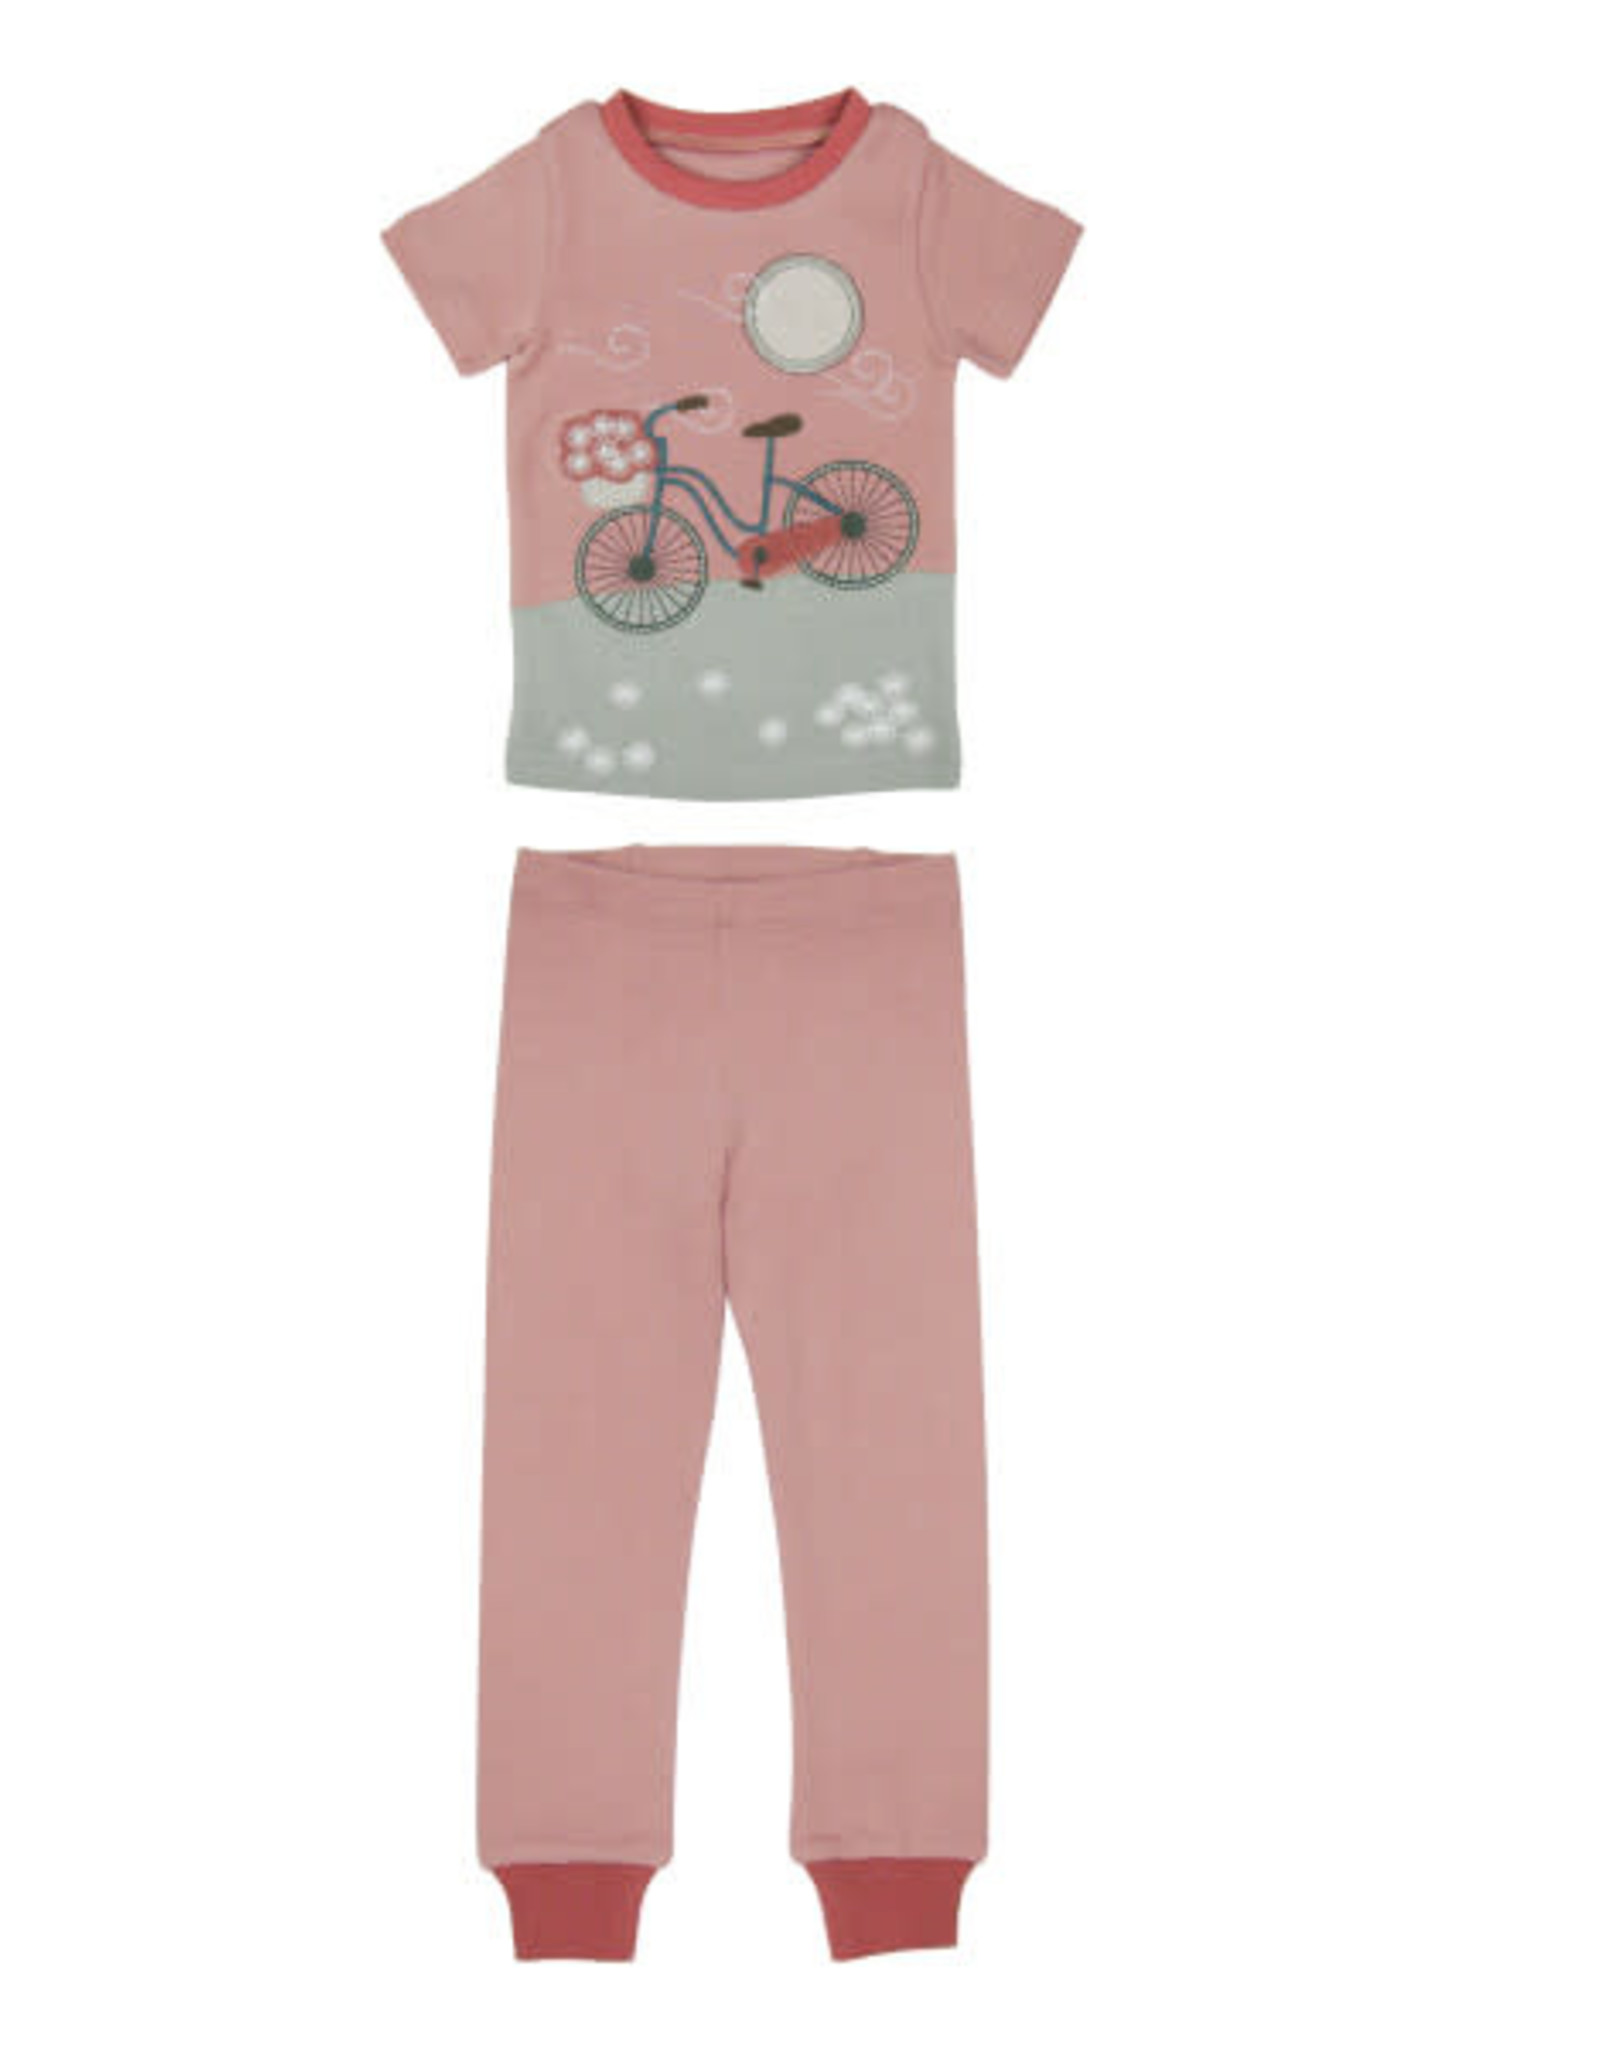 L'oved Baby Appliqué Short Sleeve PJ Set -  Bicycle